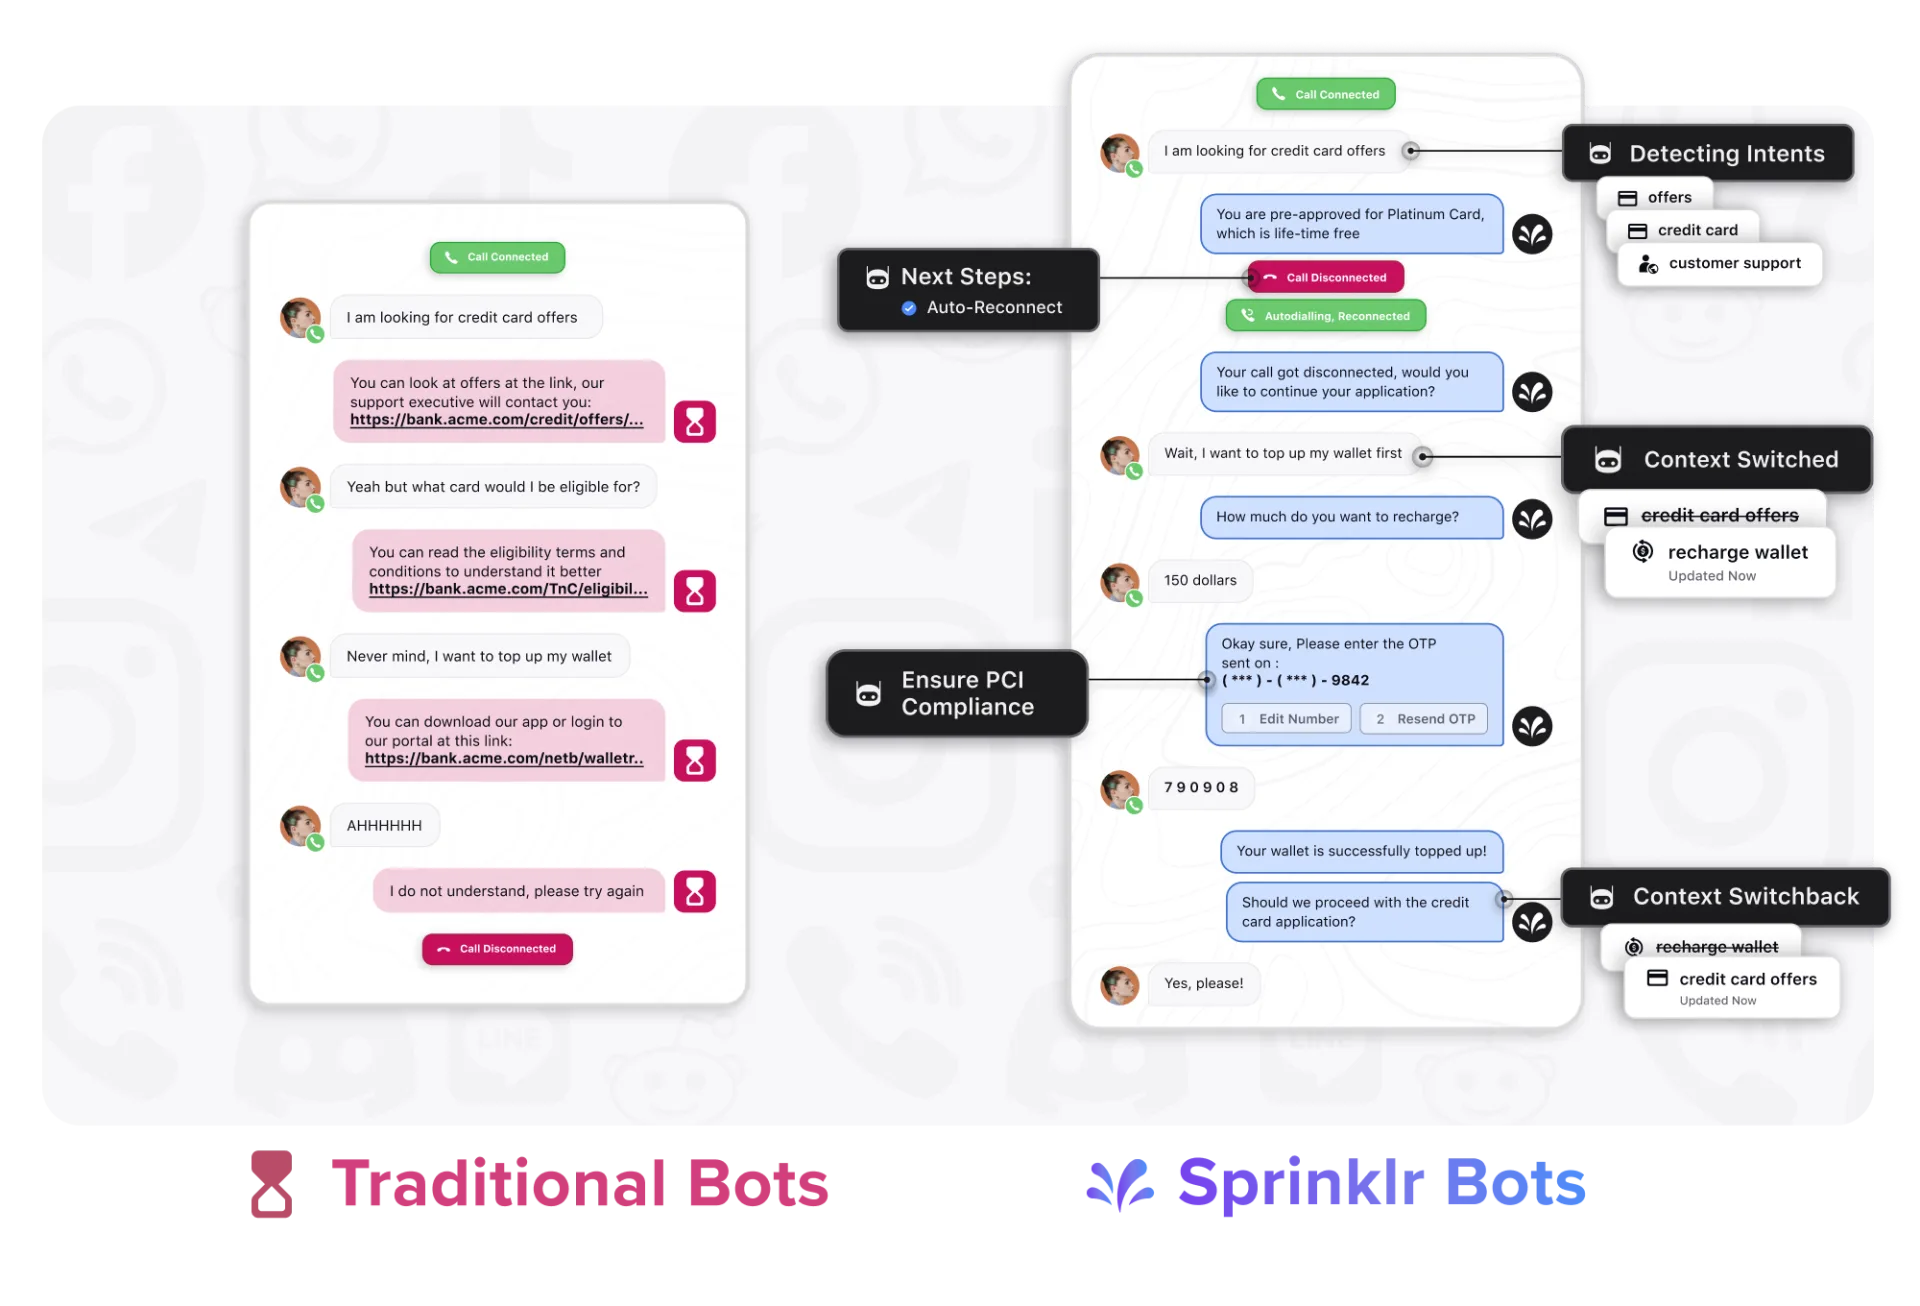 Conversational AI chatbot in Sprinklr Service conversational AI platform